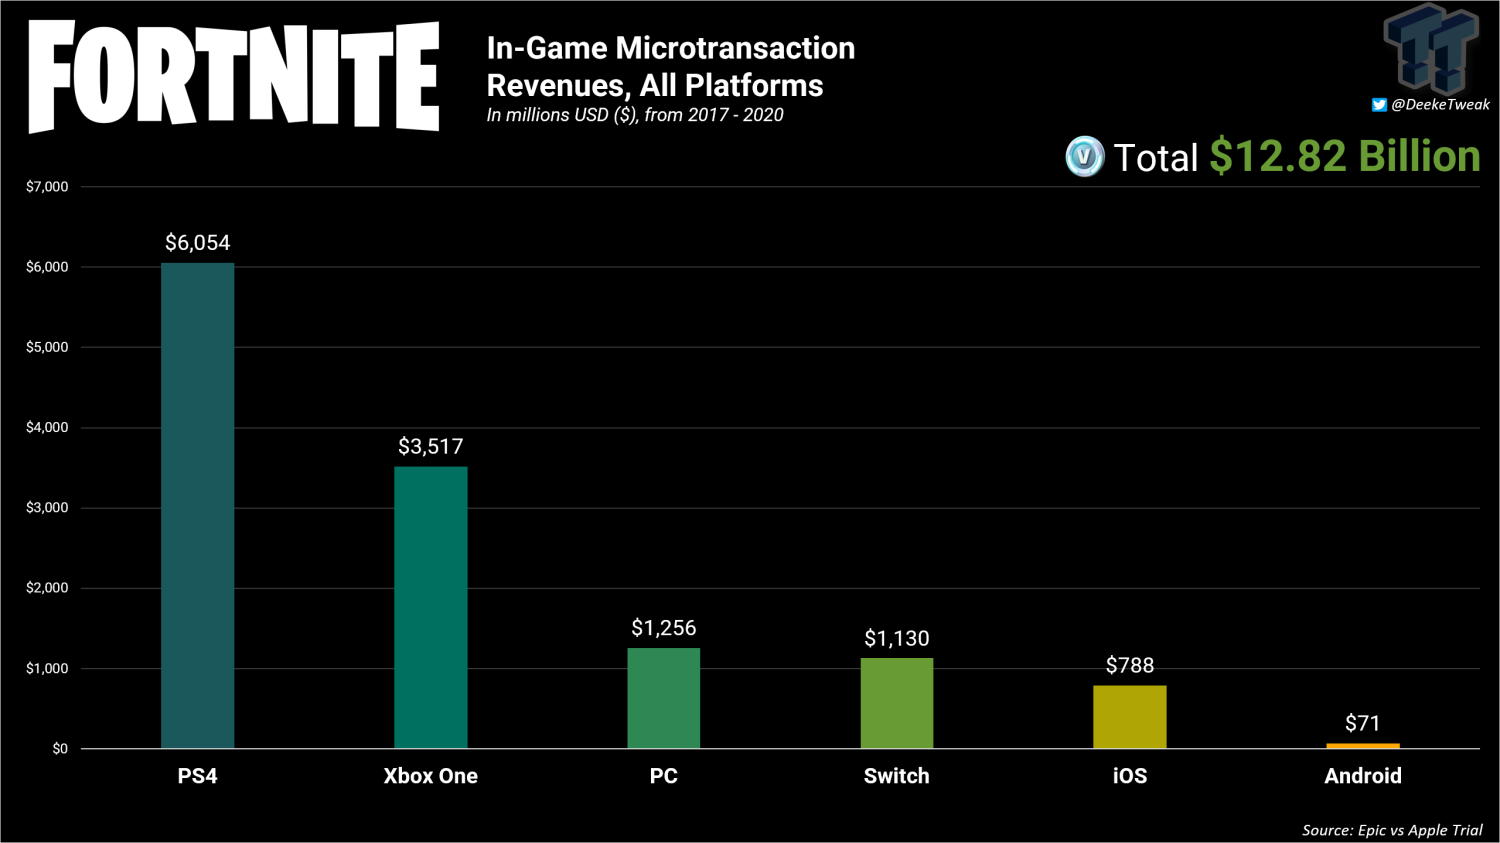 Fortnite' Publisher Epic Games Closes $1.78 Billion Funding Round